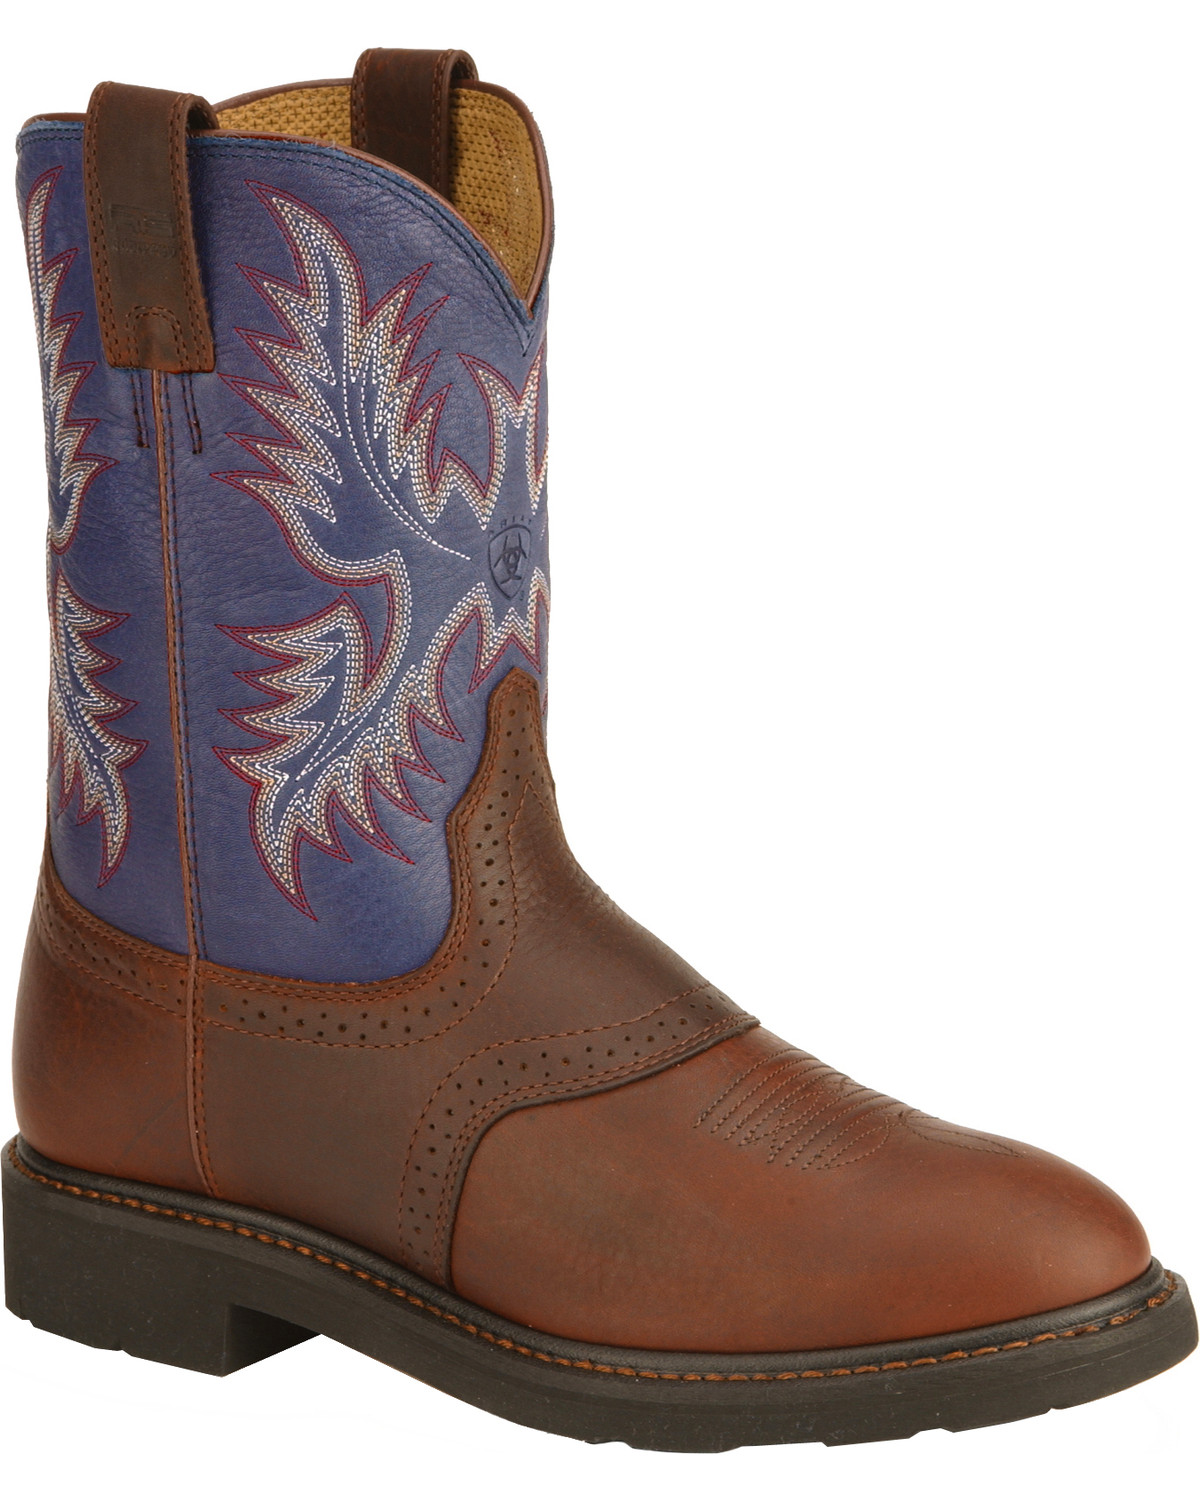 Ariat Sierra Saddle Vamp Work Boots - Soft Toe